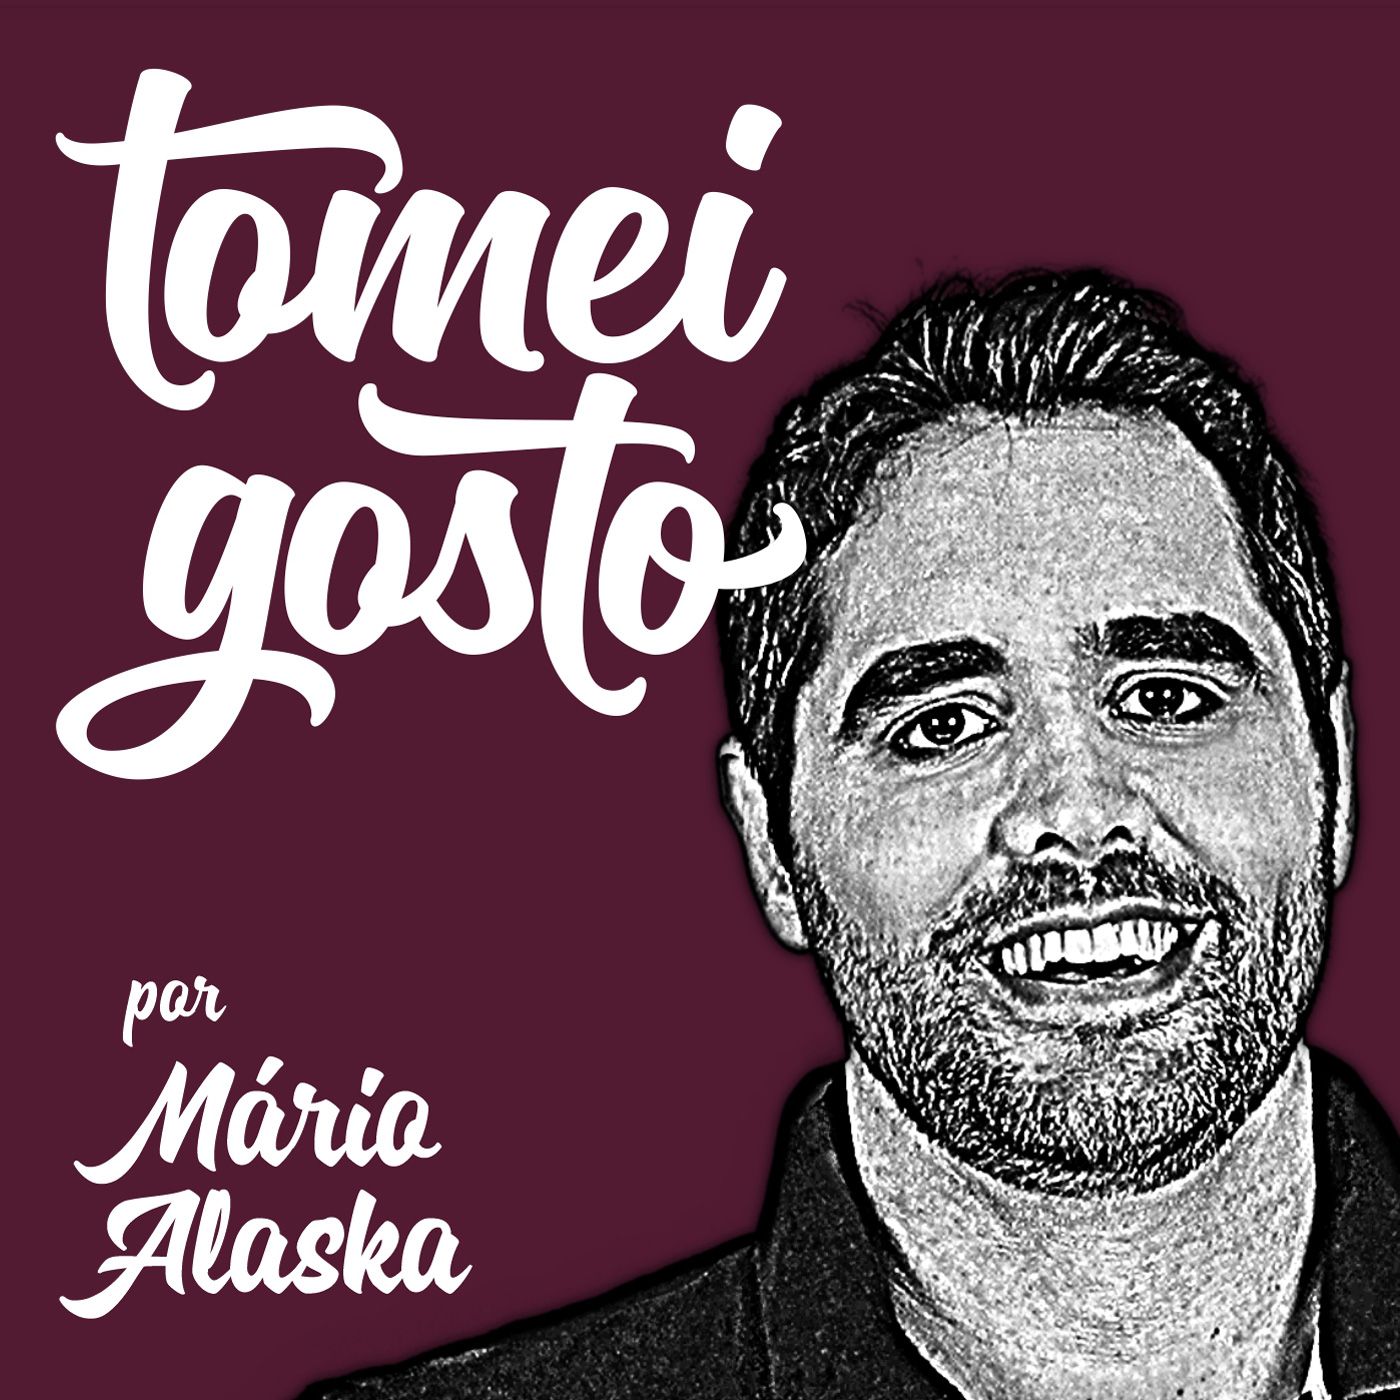 TOMEI GOSTO – TIAGO AMARAL O padeiro preguiçoso